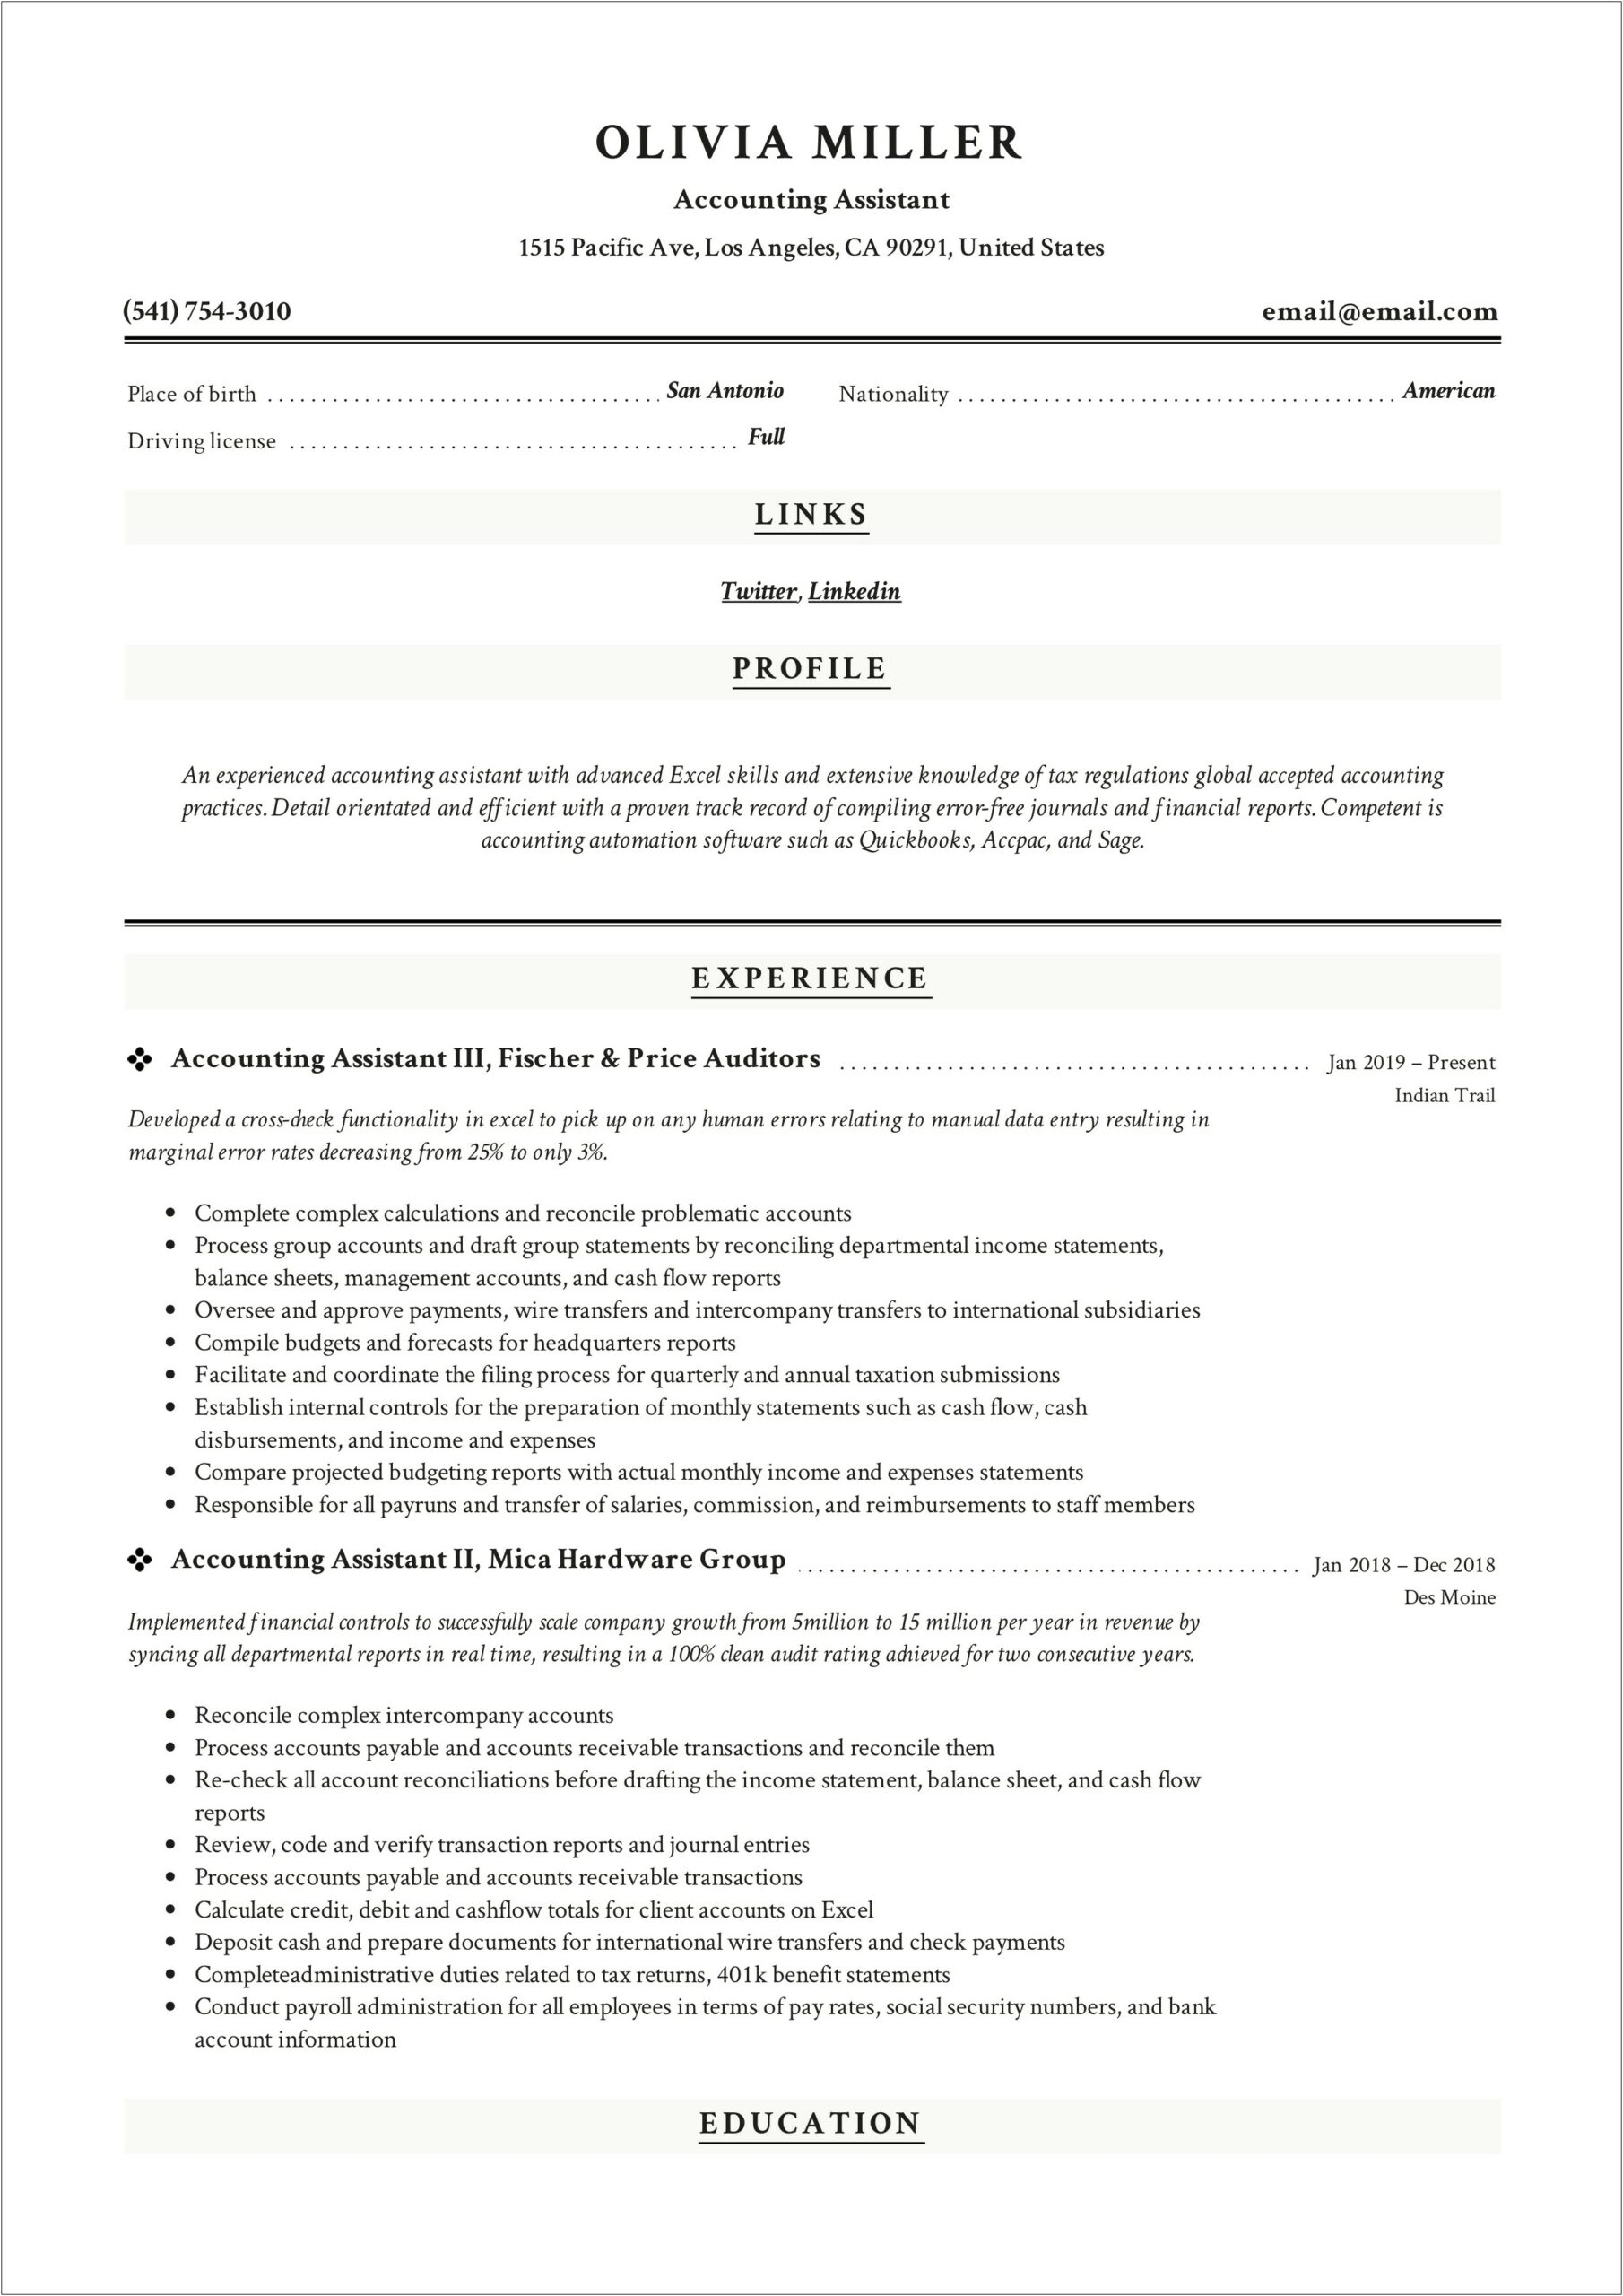 Sample Finance Resume Objective Statement